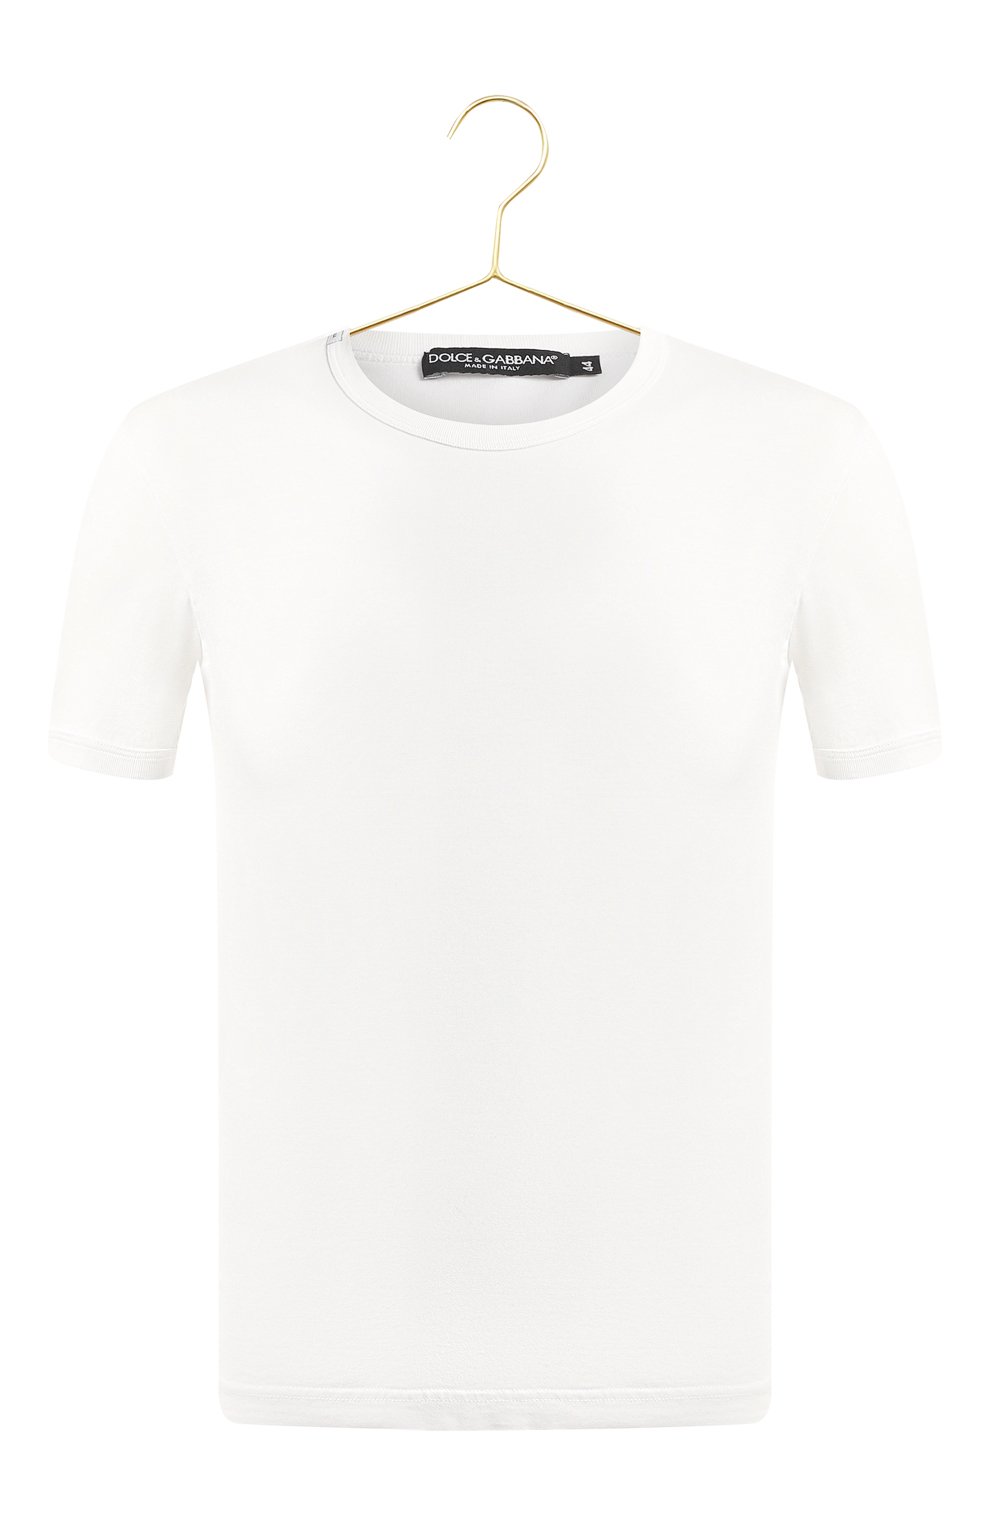 Хлопковая футболка | Dolce & Gabbana | Белый - 1